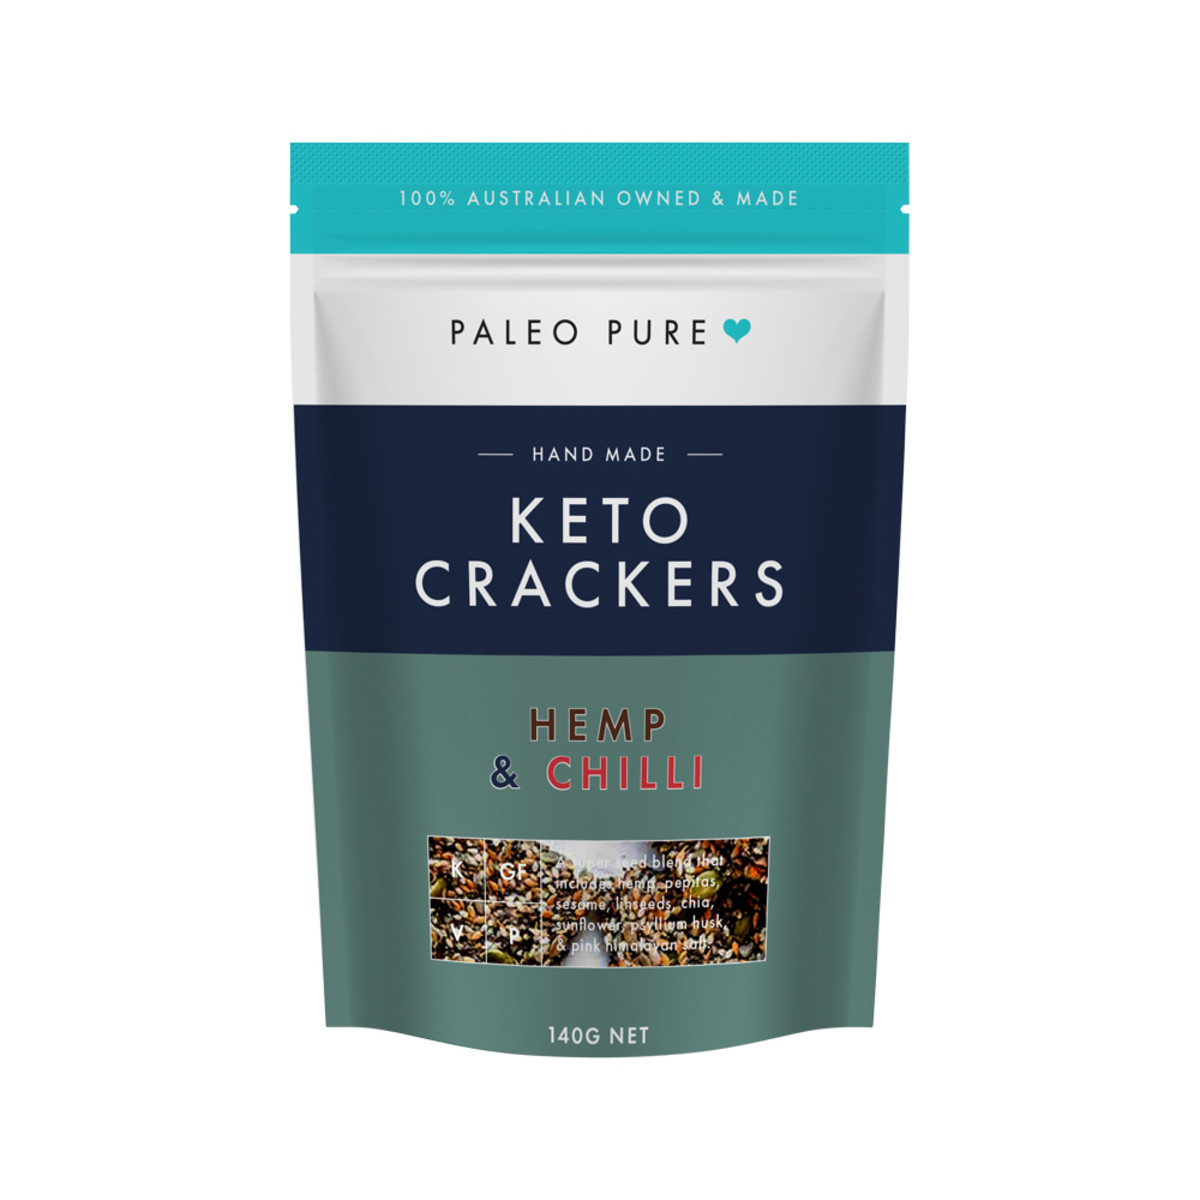 PALEO PURE - Keto Crackers Hemp & Chilli